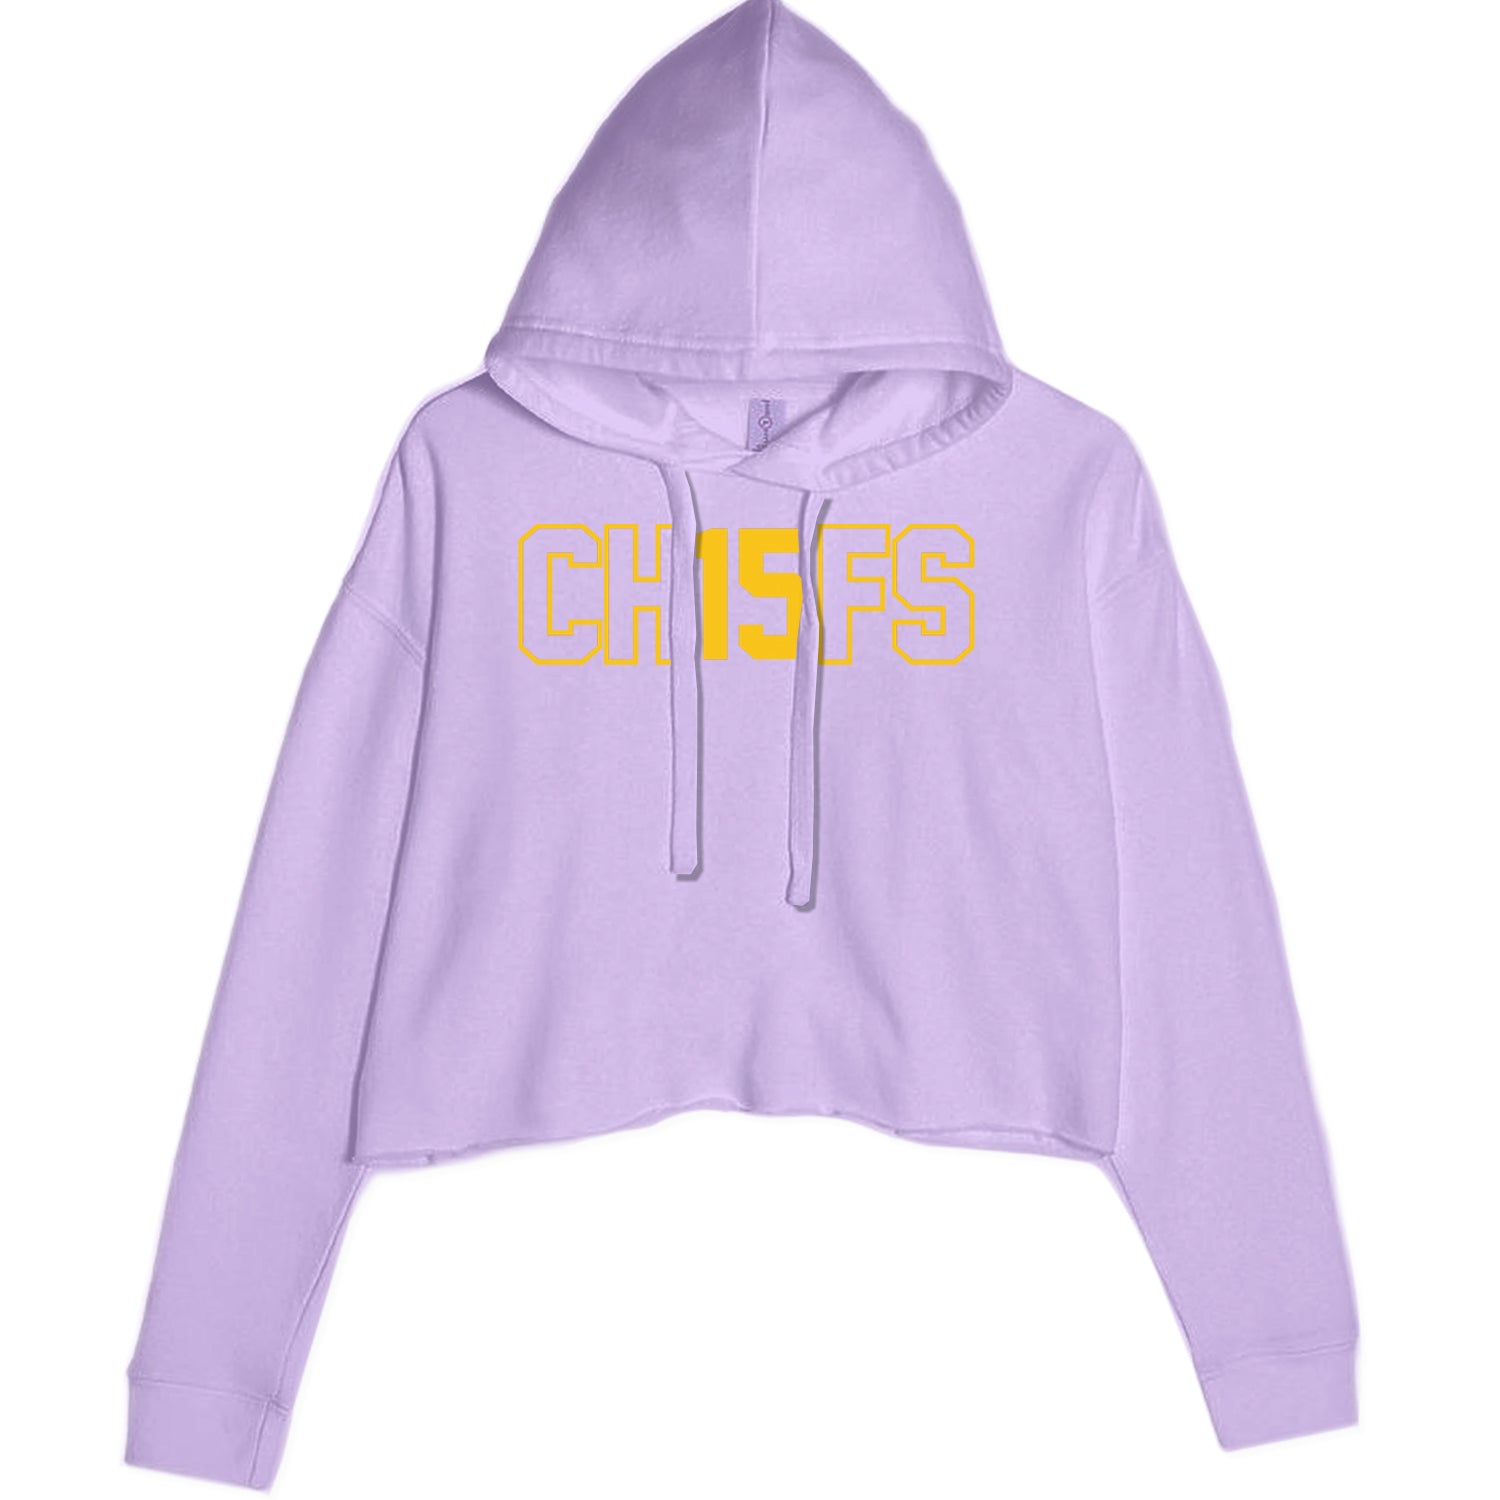 Ch15fs Chief 15 Shirt Cropped Hoodie Sweatshirt Lavender